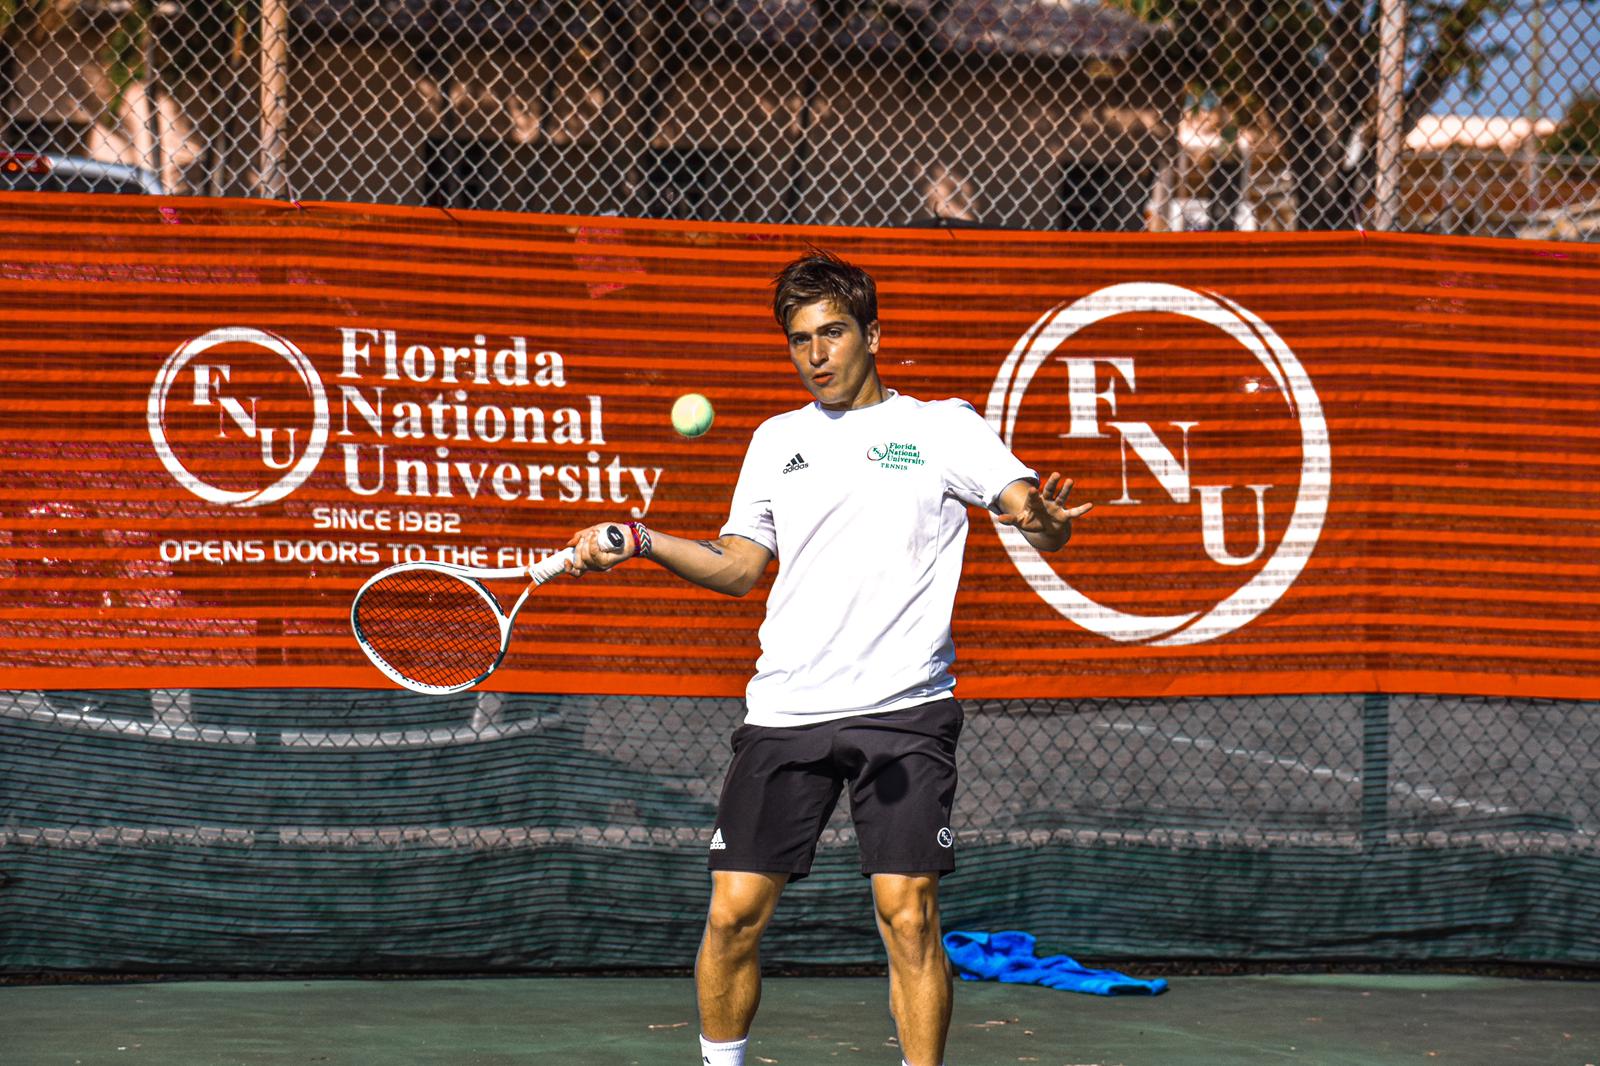 FNU men's tennis player Joaquim during the game